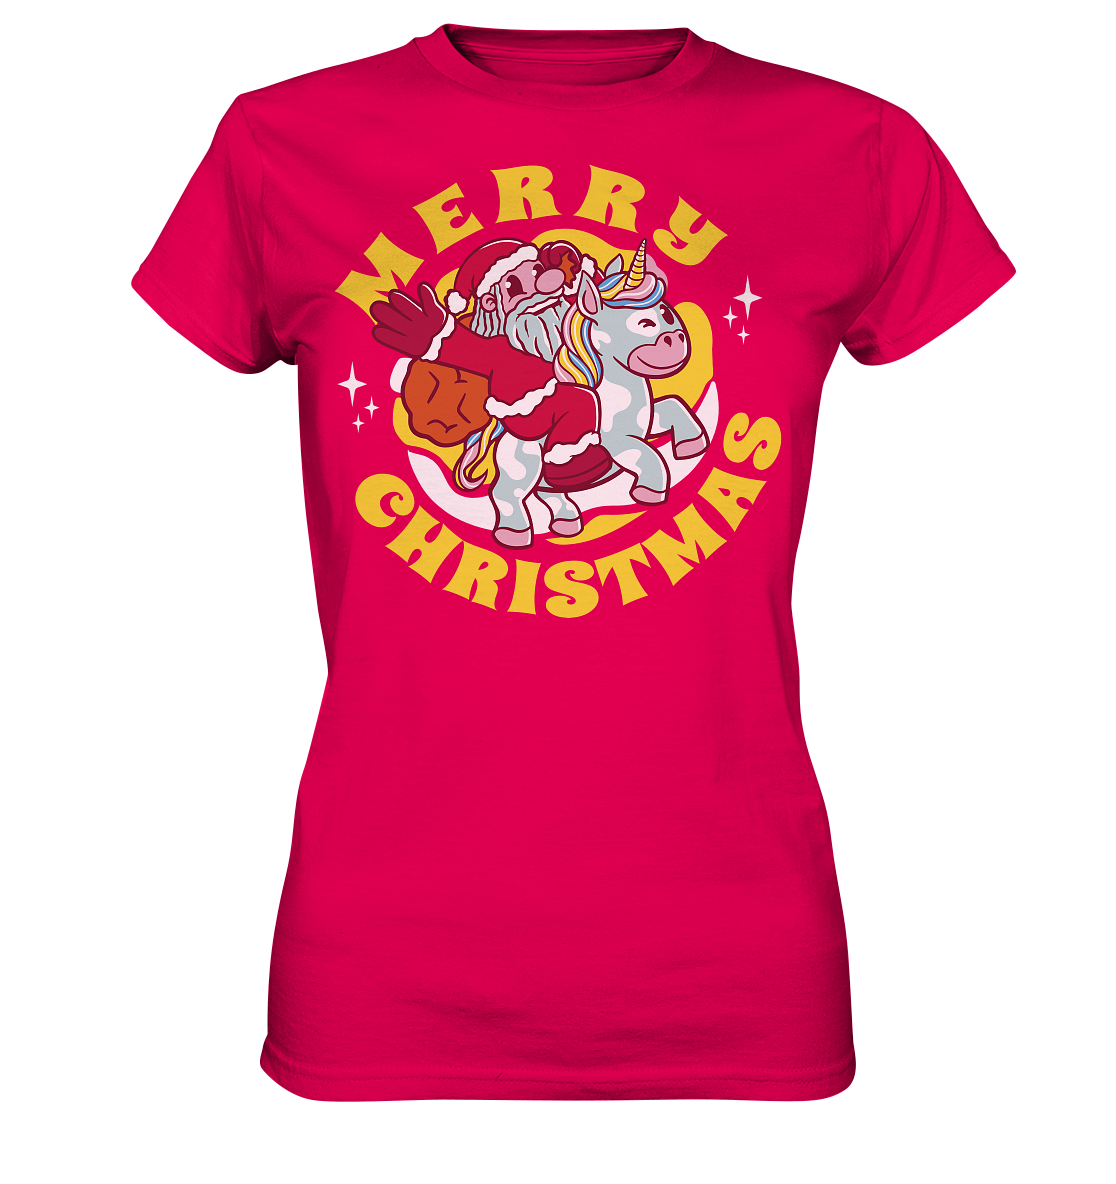 Riding Santa Claus, Merry Christmas, Merry Christmas - Ladies Premium Shirt